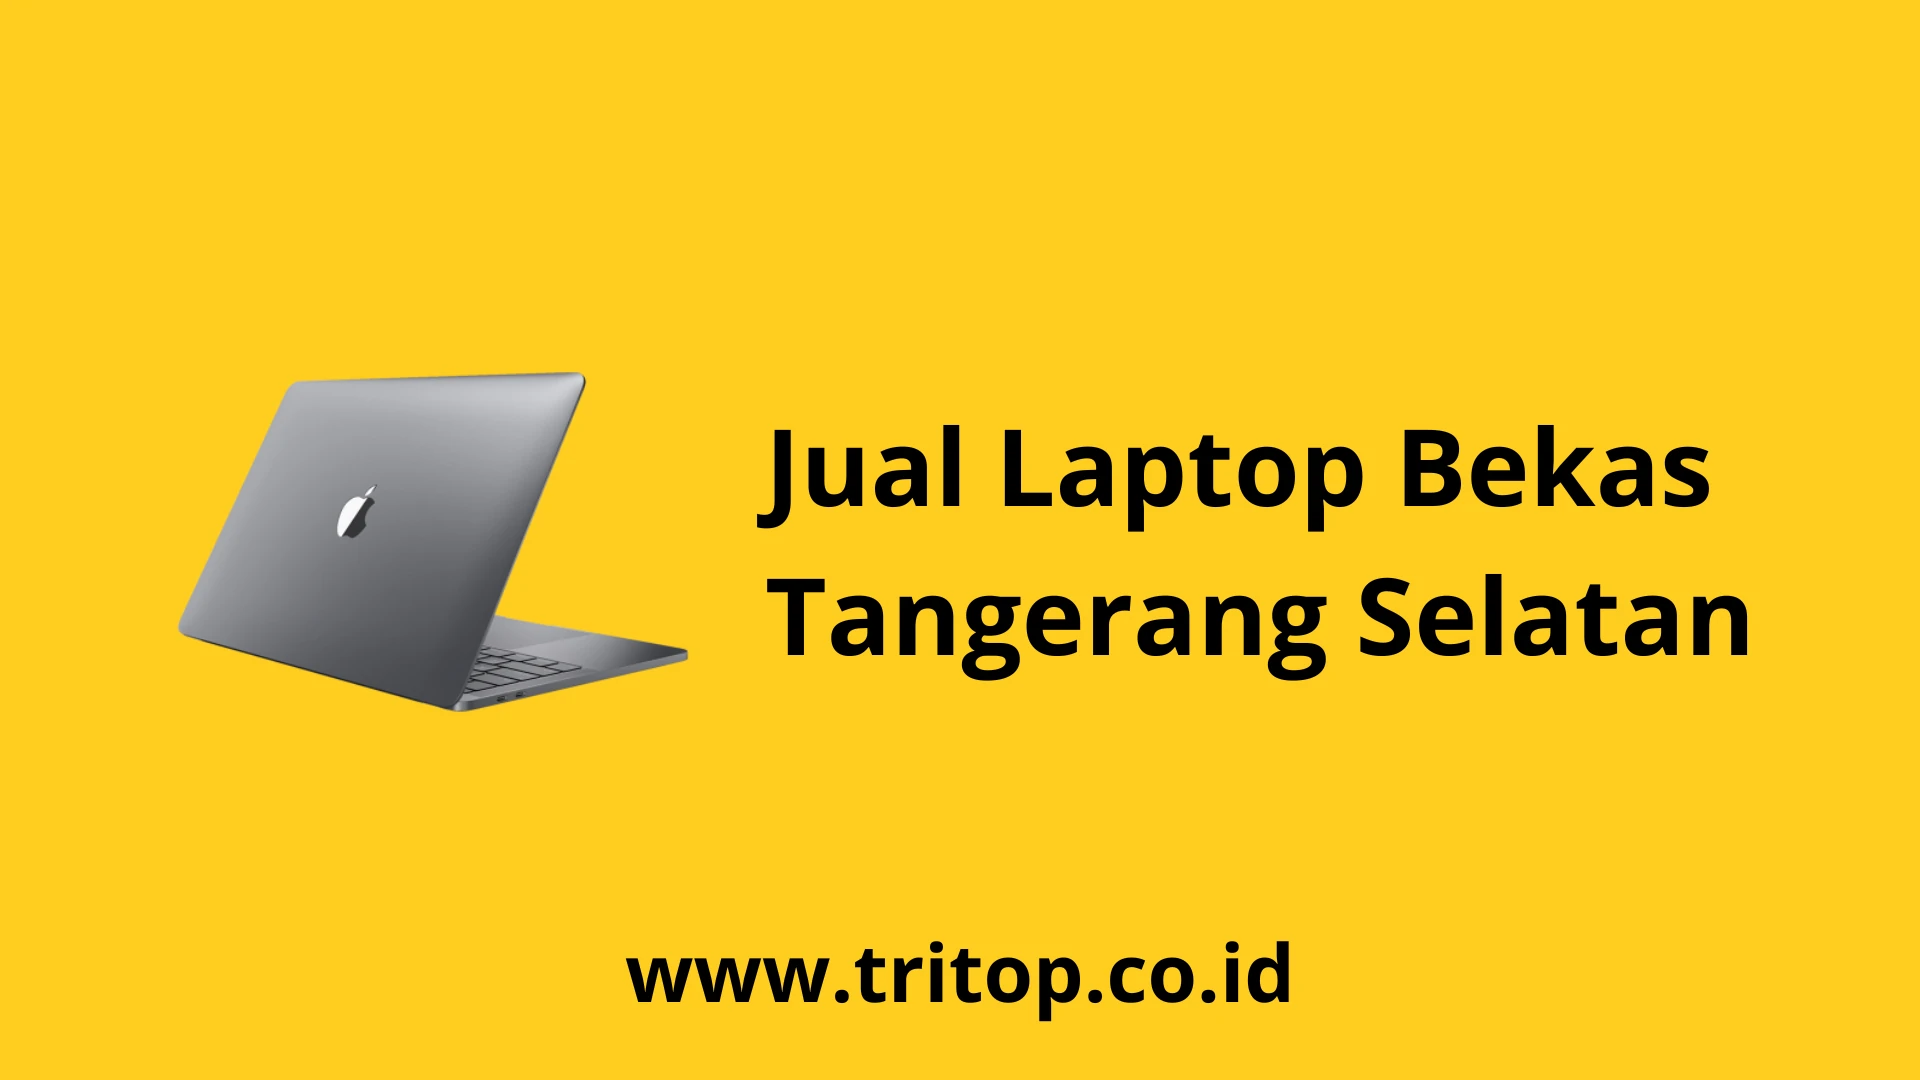 Jual Laptop Bekas Tangerang Selatan